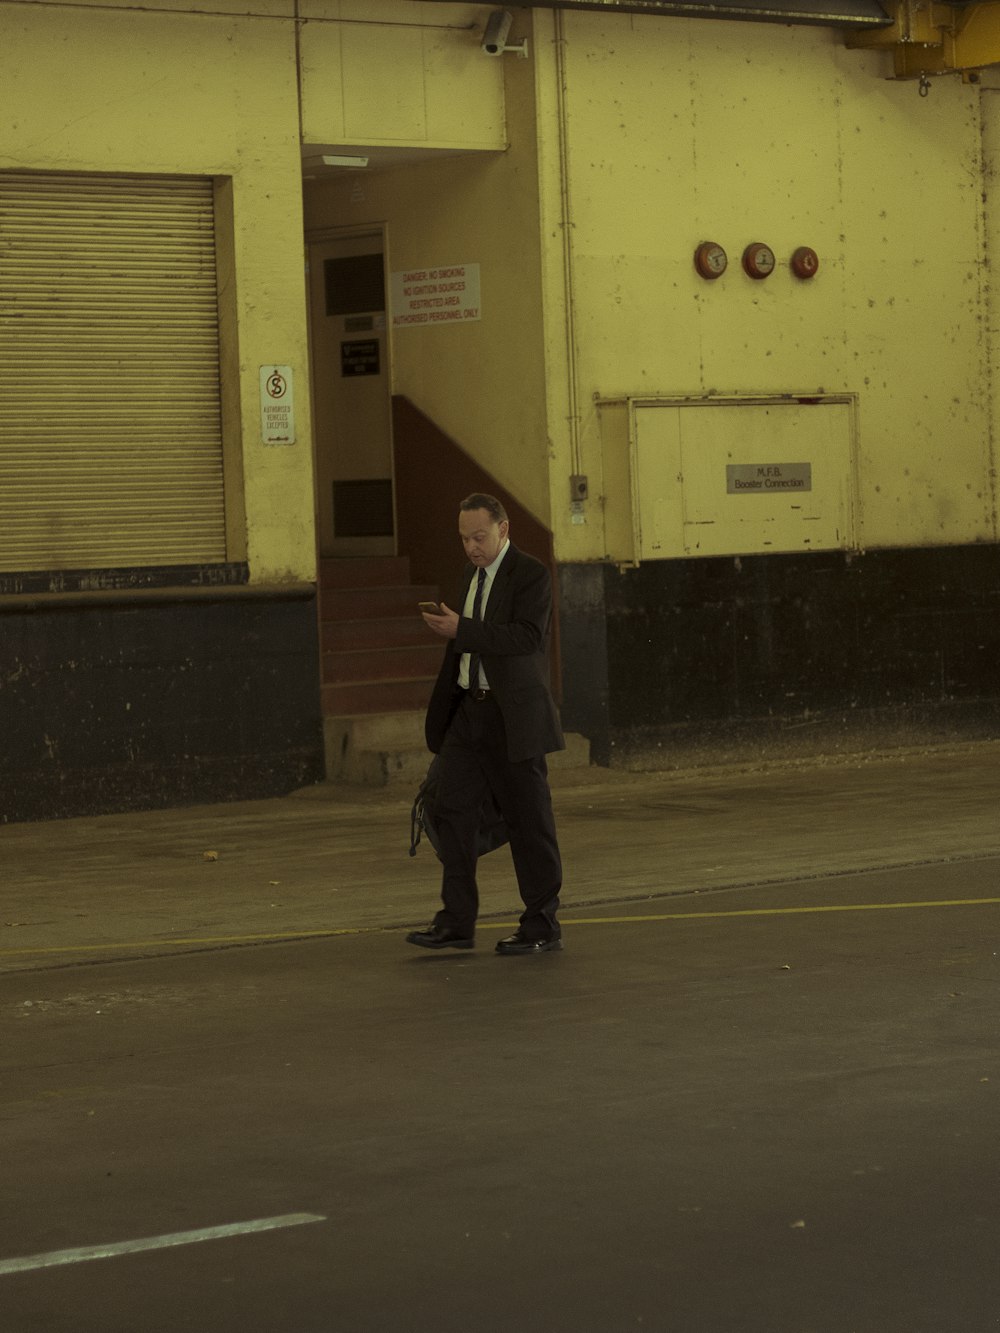 a man in a suit walking down a street